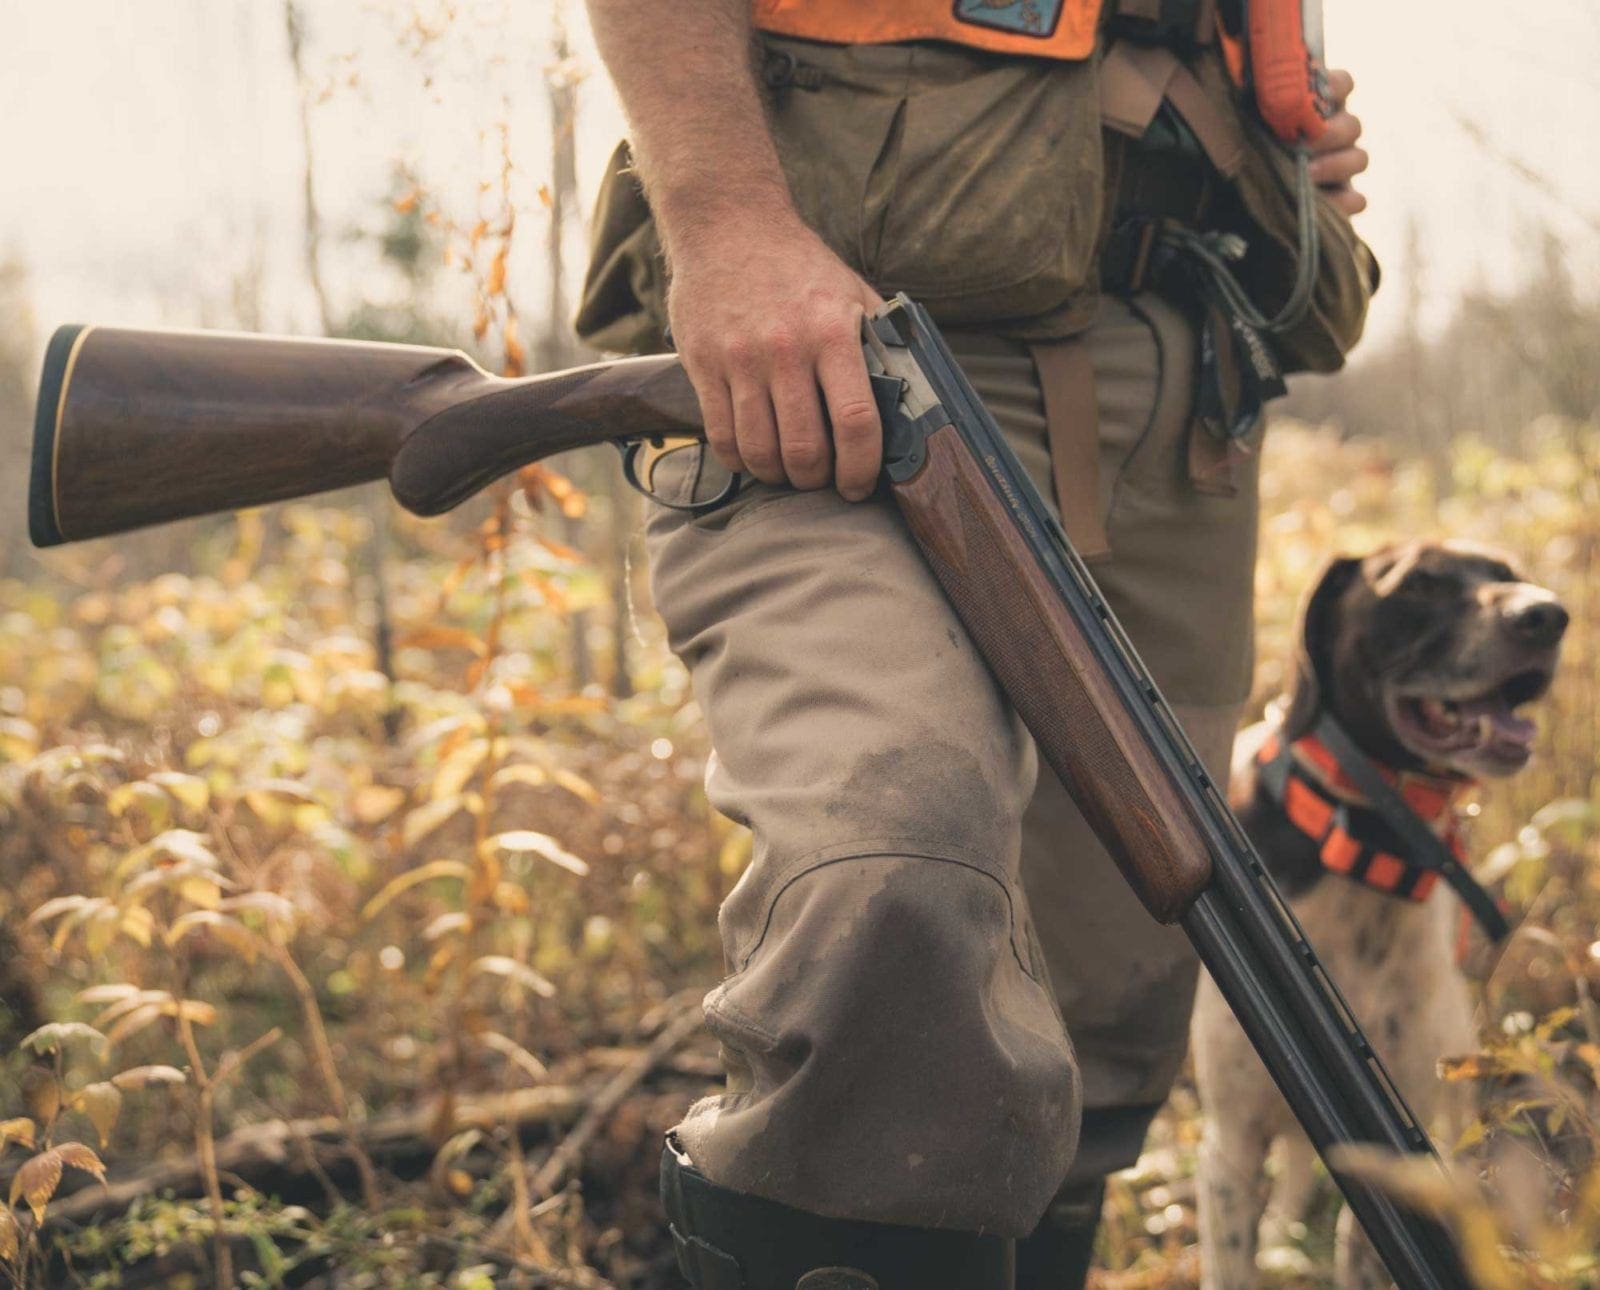 A bird hunter with an upland shotgun and his bird dog.